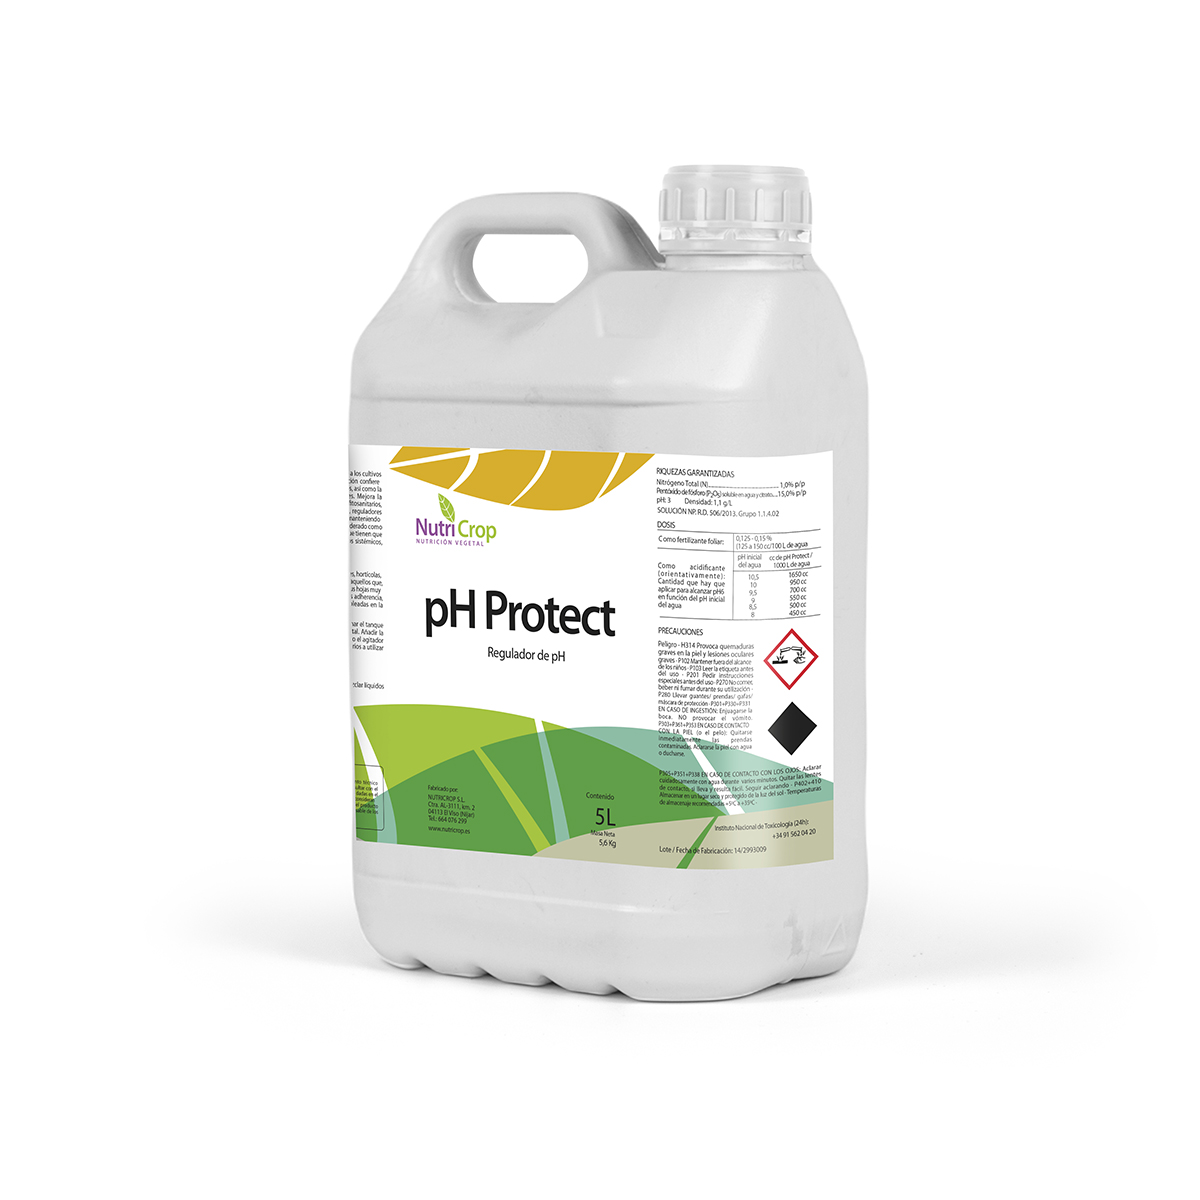 pH Protect - Nutricrop